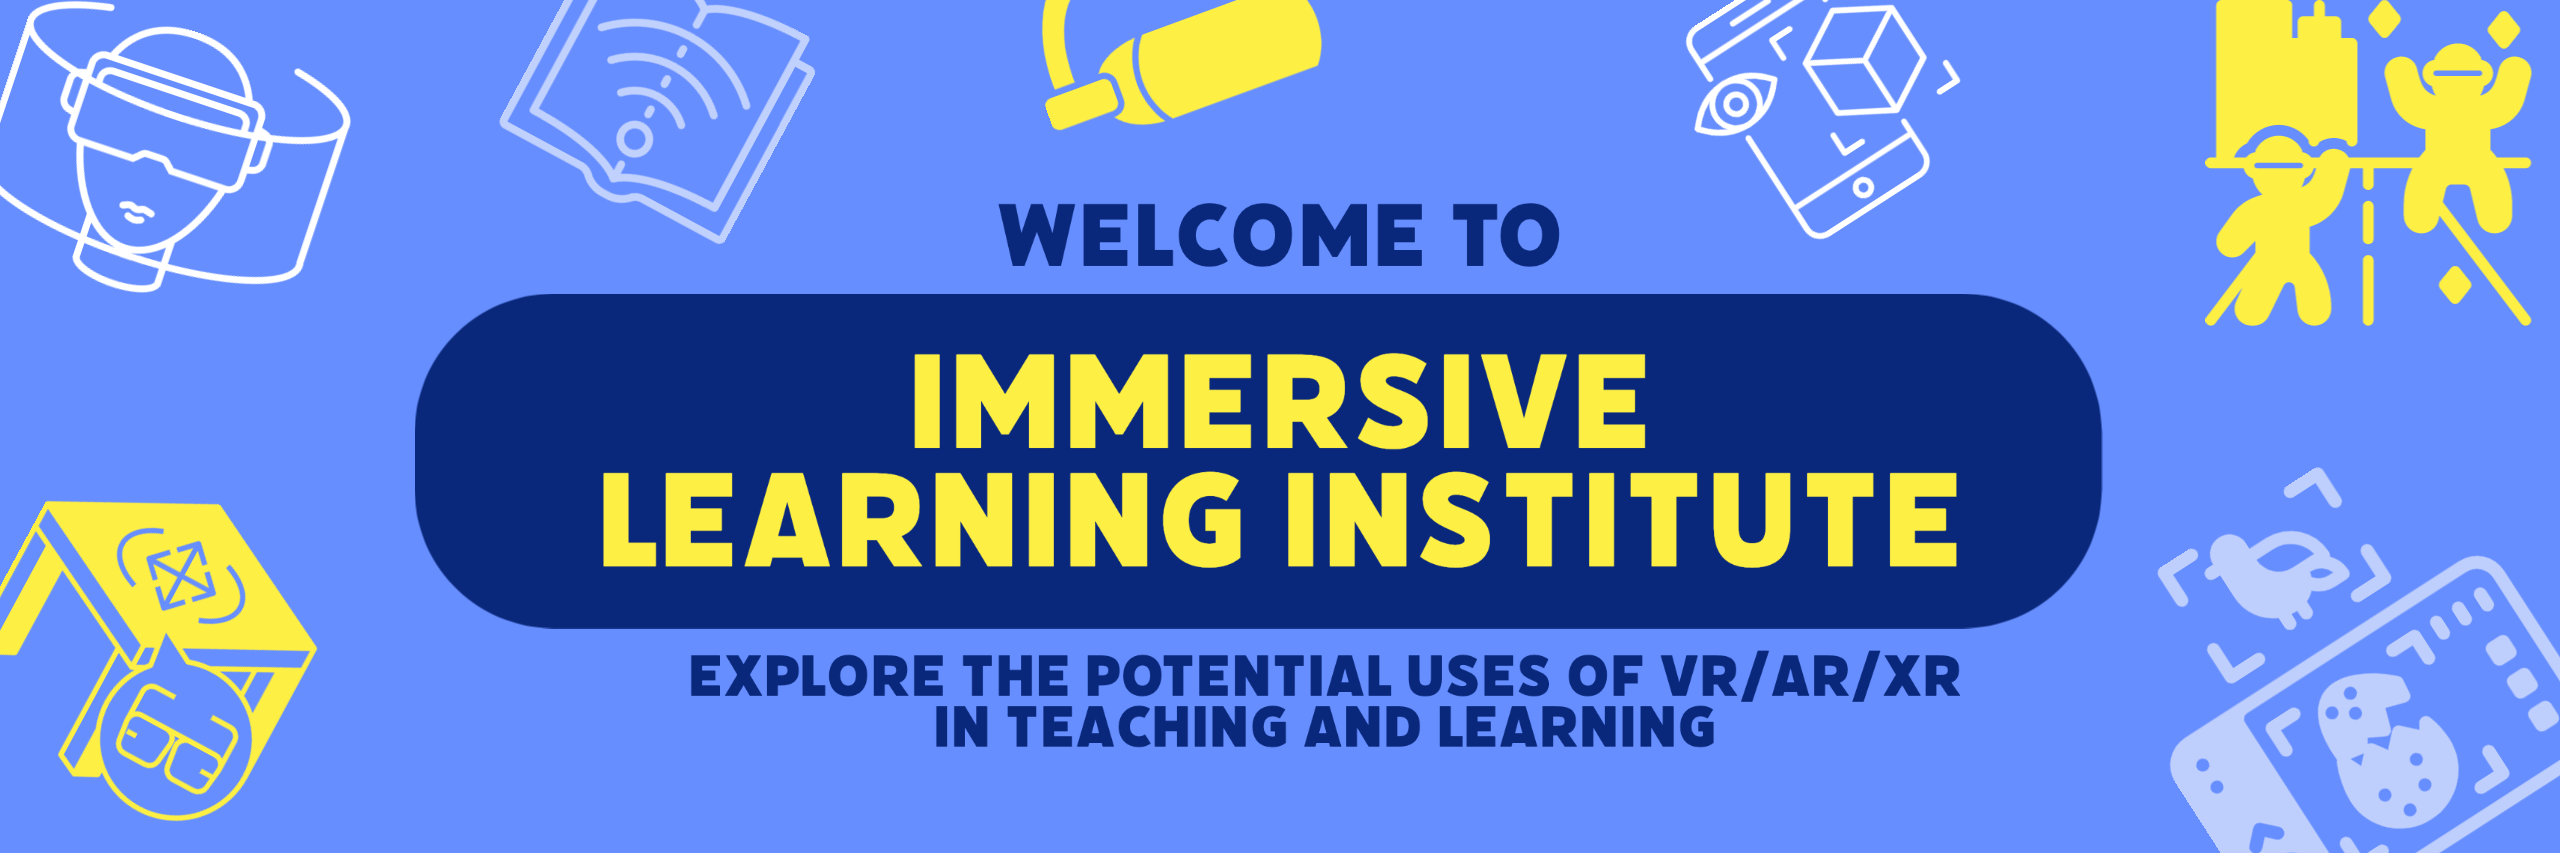 immersive learning institute banner